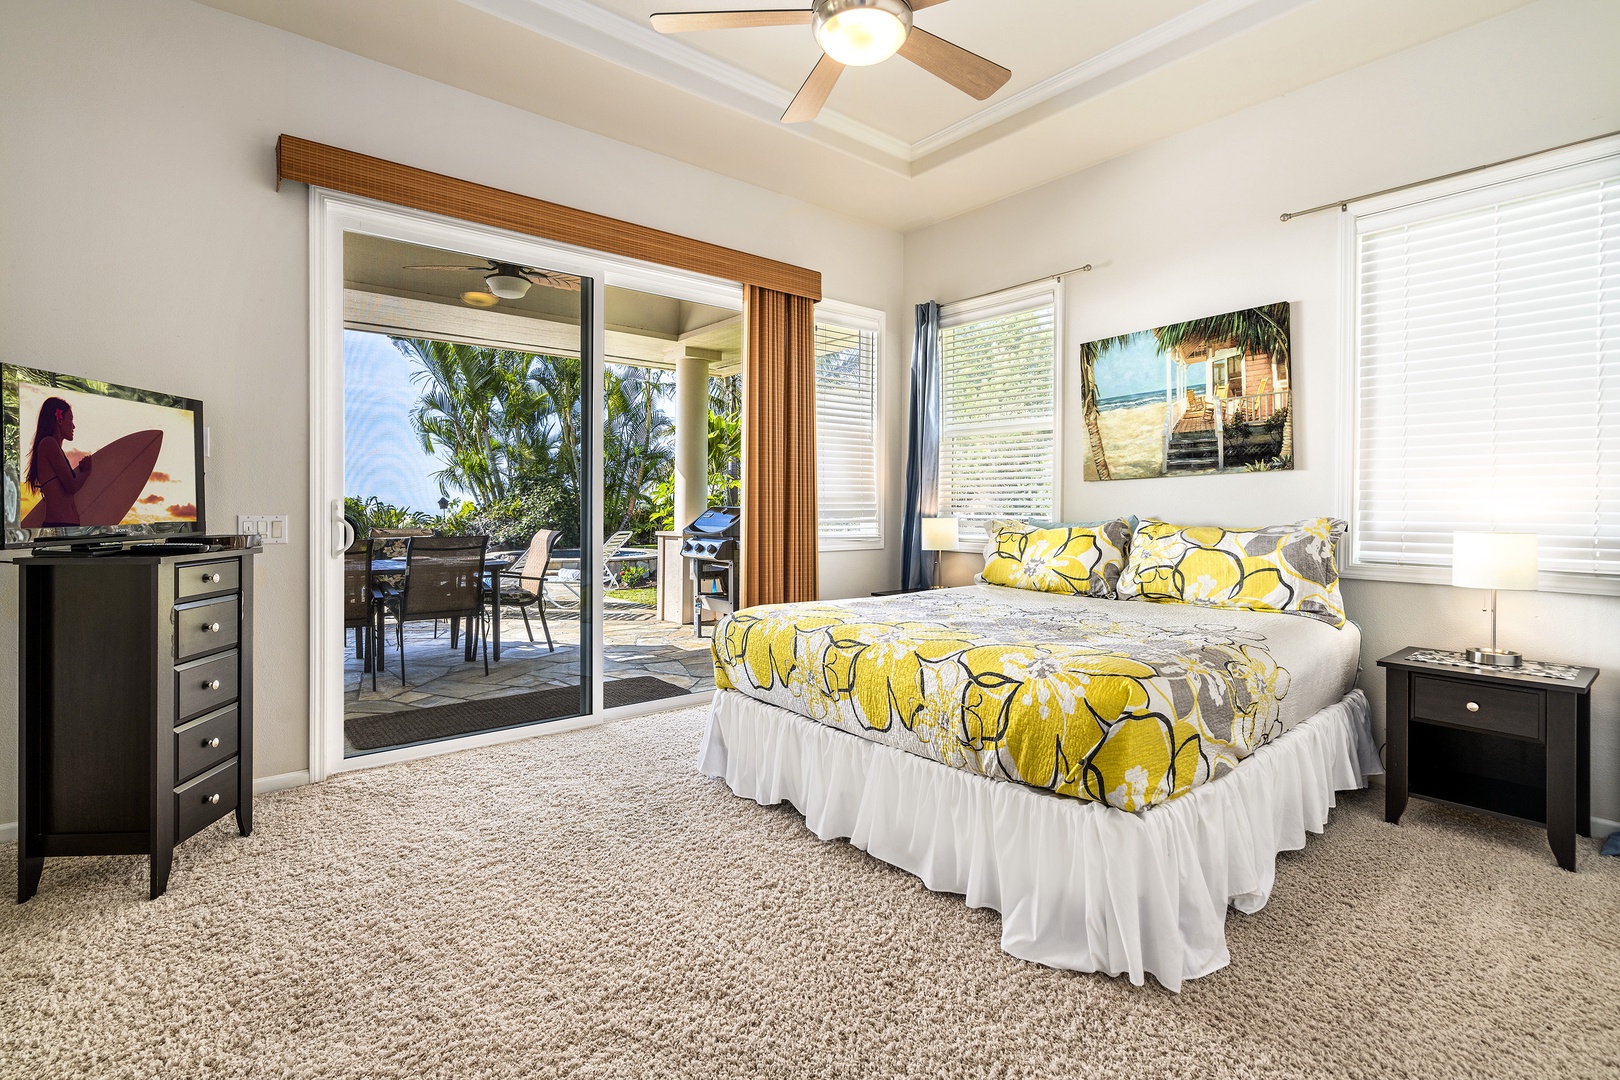 Kailua Kona Vacation Rentals, Piko Nani - Guest bedroom with king bed